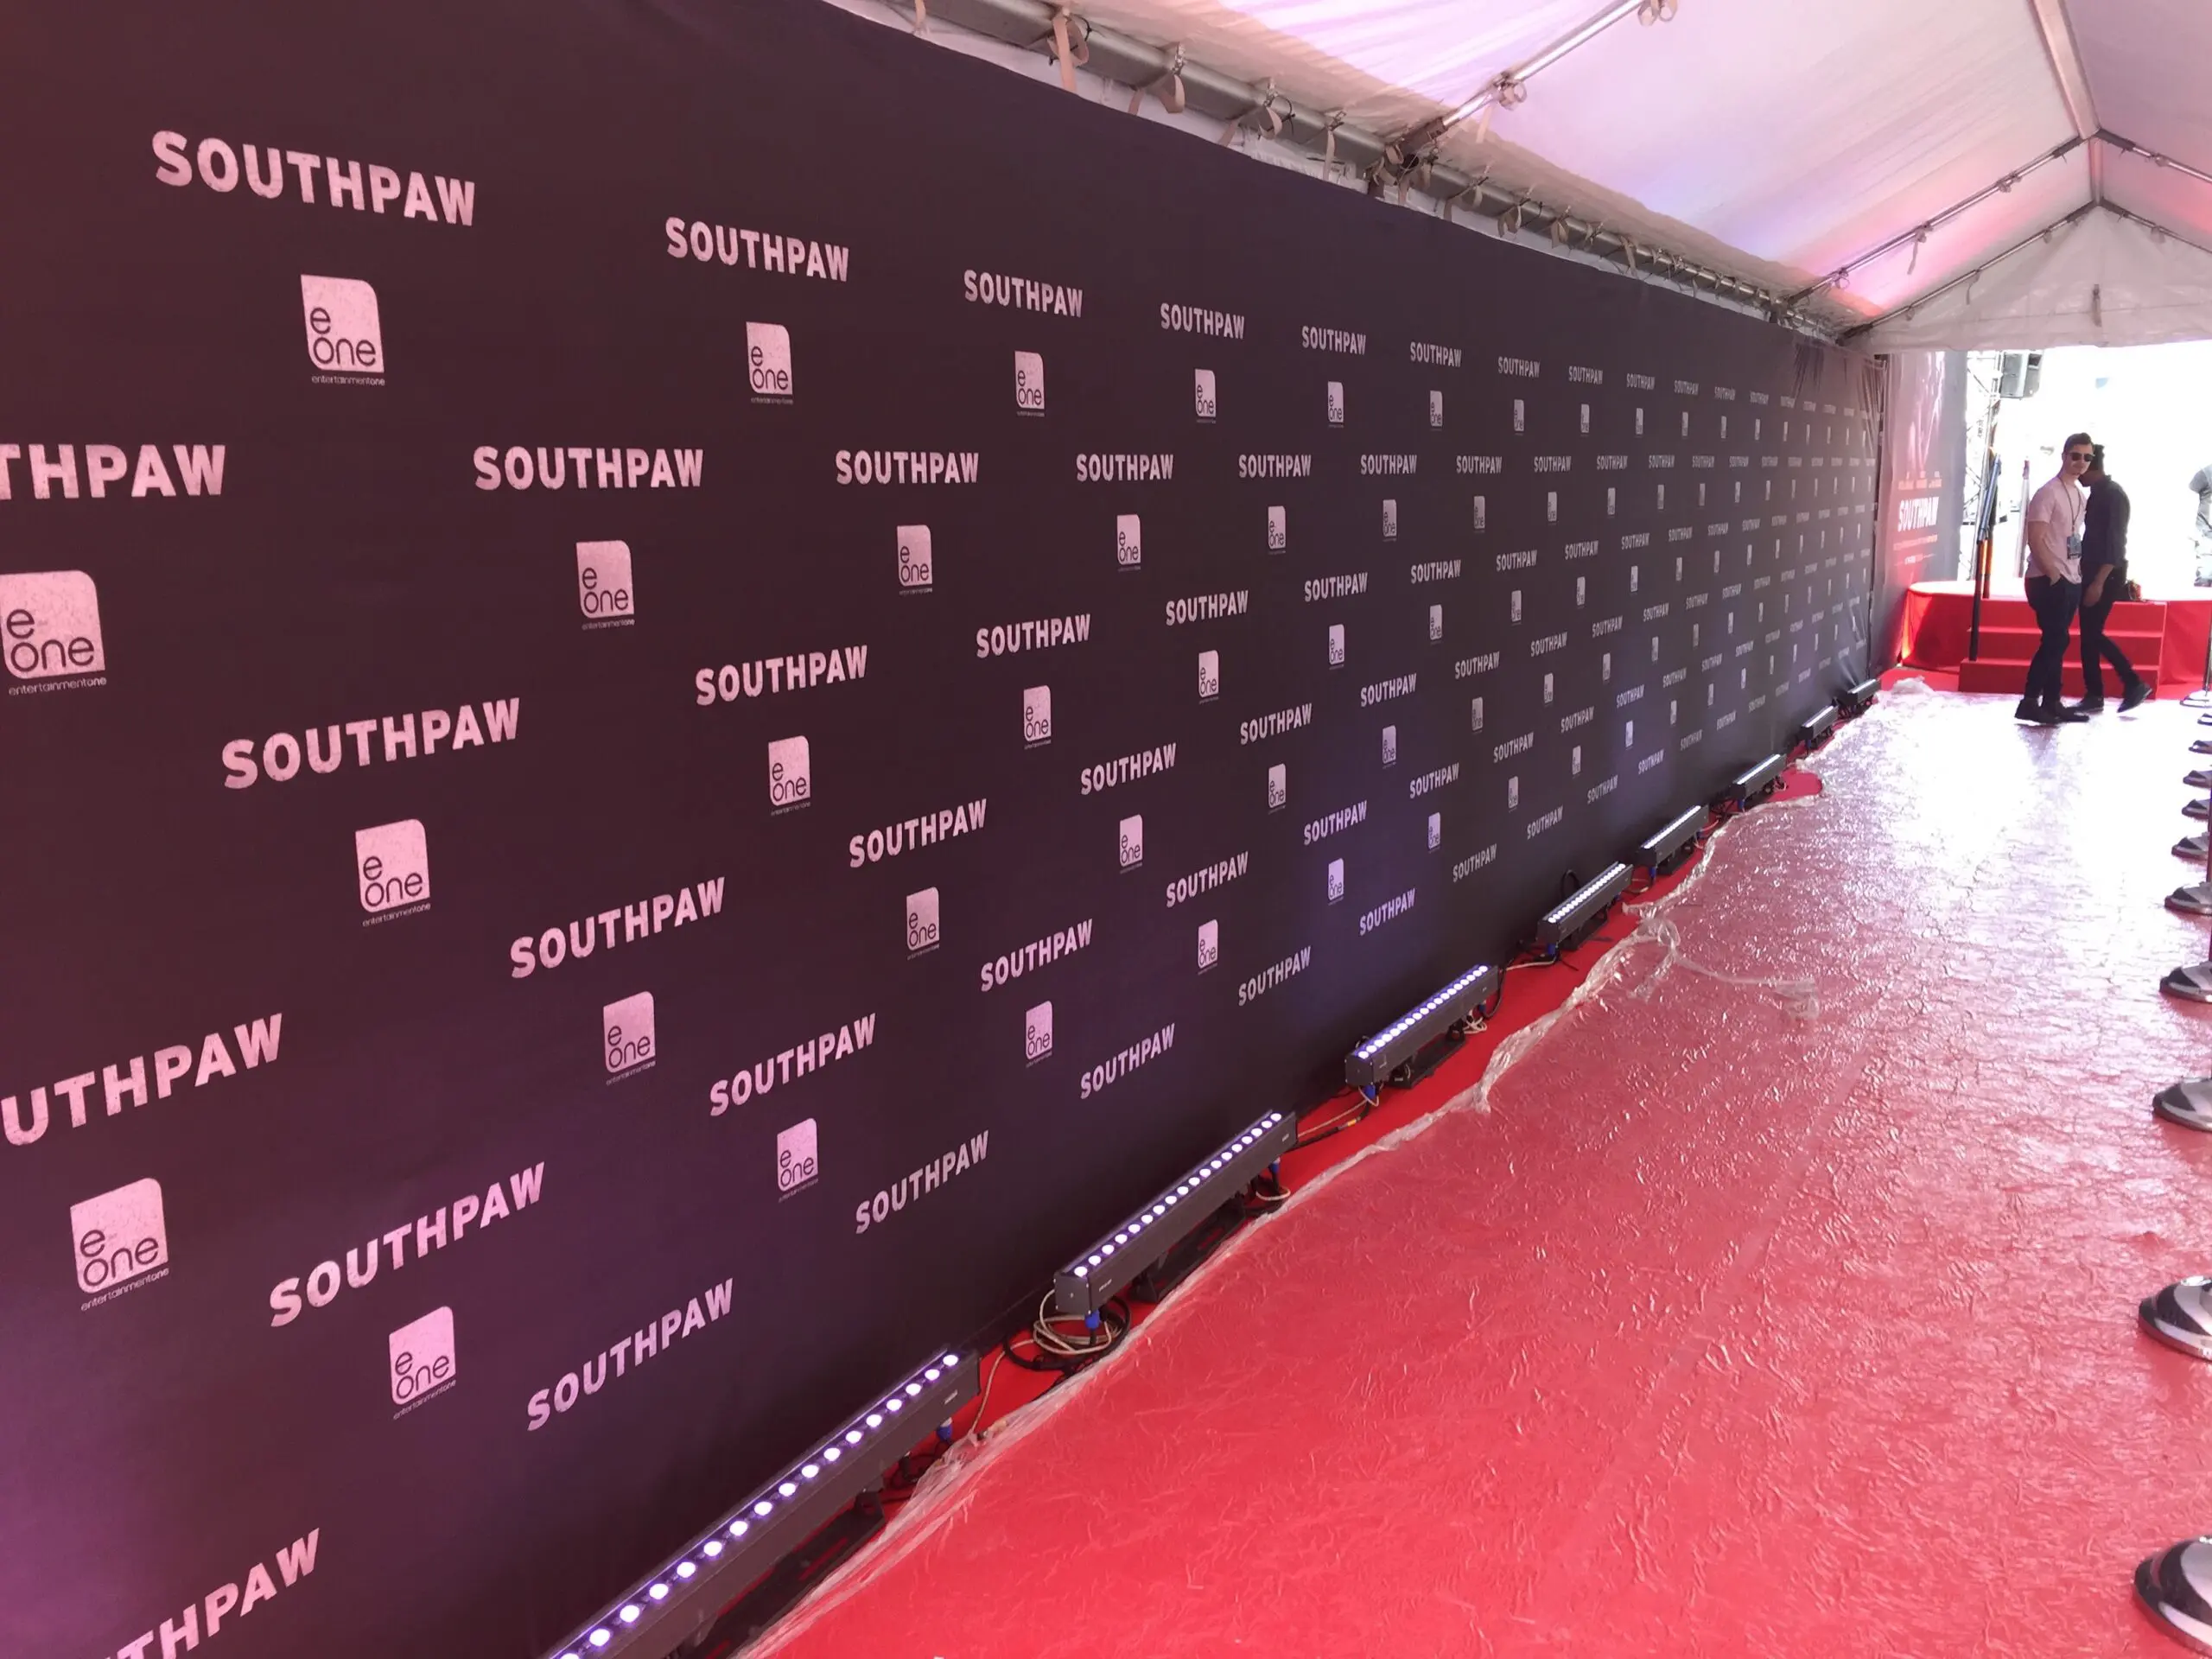 Movie Premiere Red Carpet Backdrop KA Media